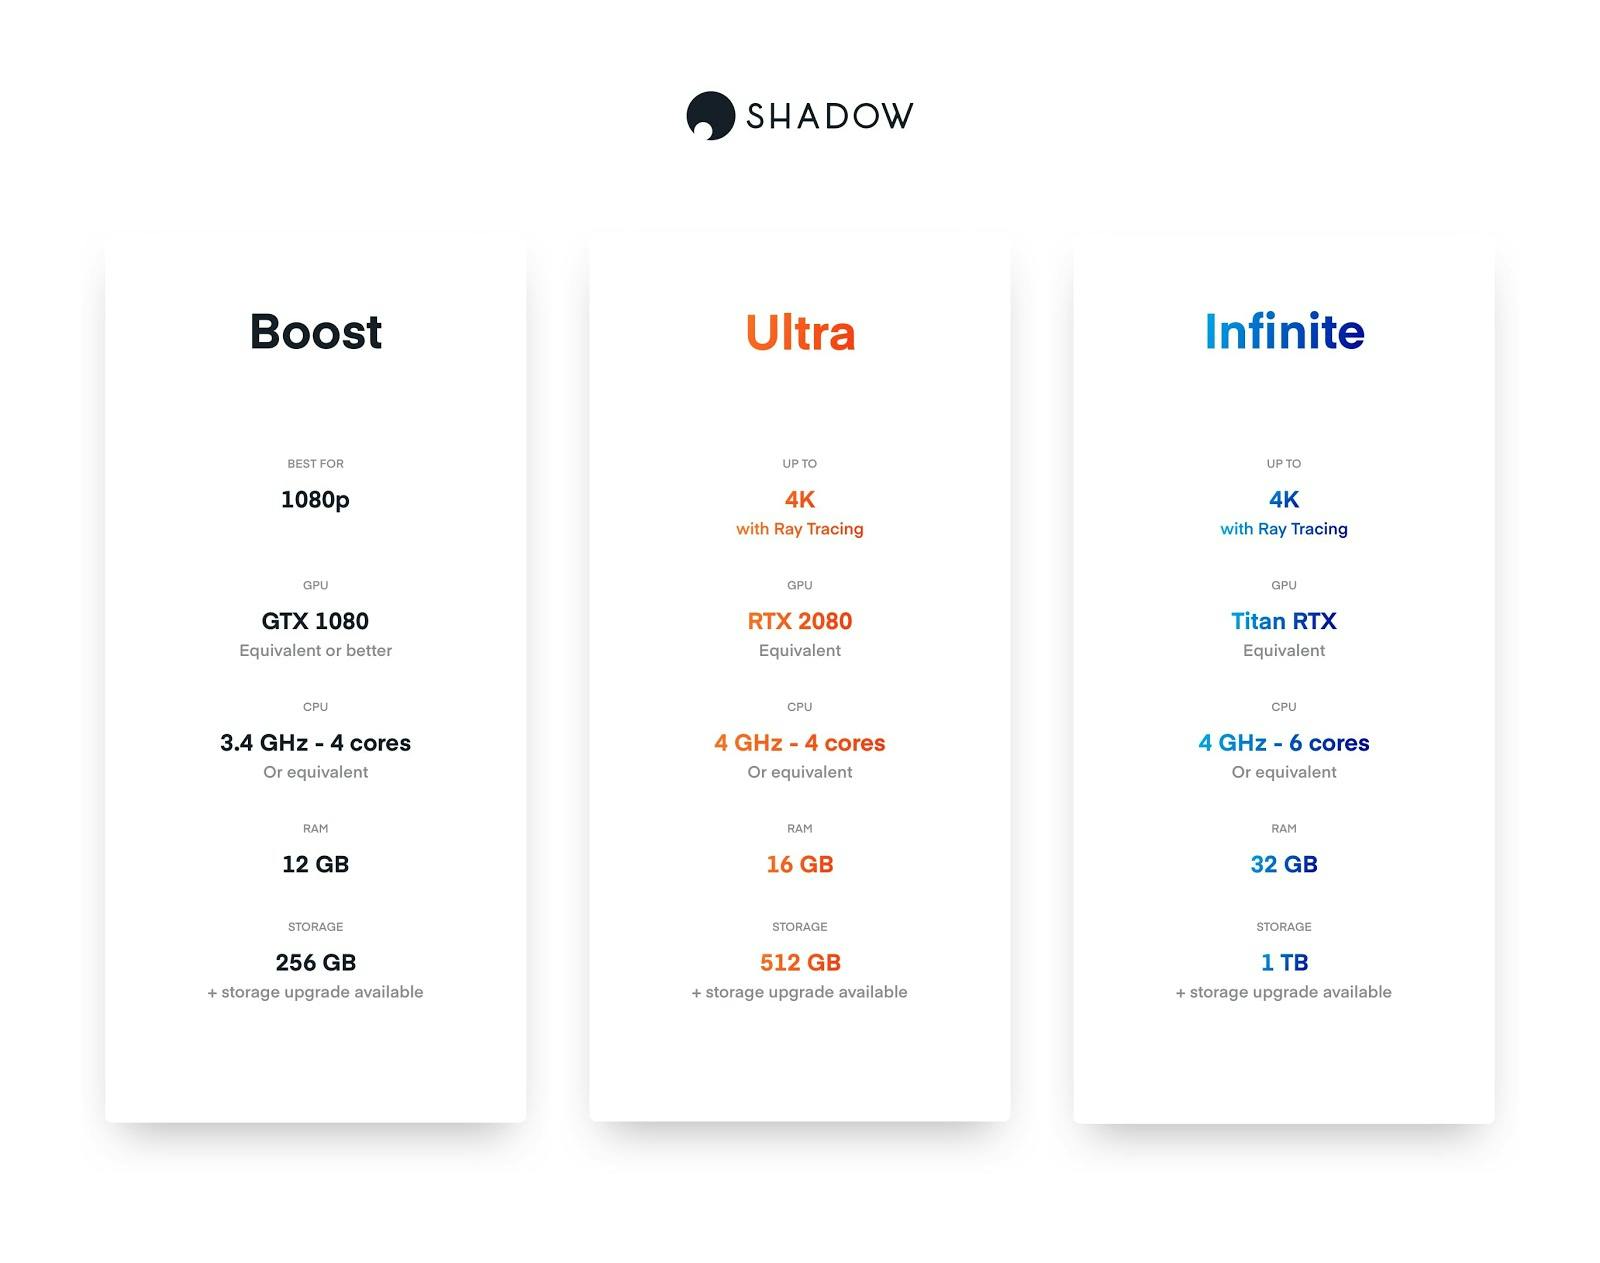 Shadow technology milestones 2019 - 3 tier configuration